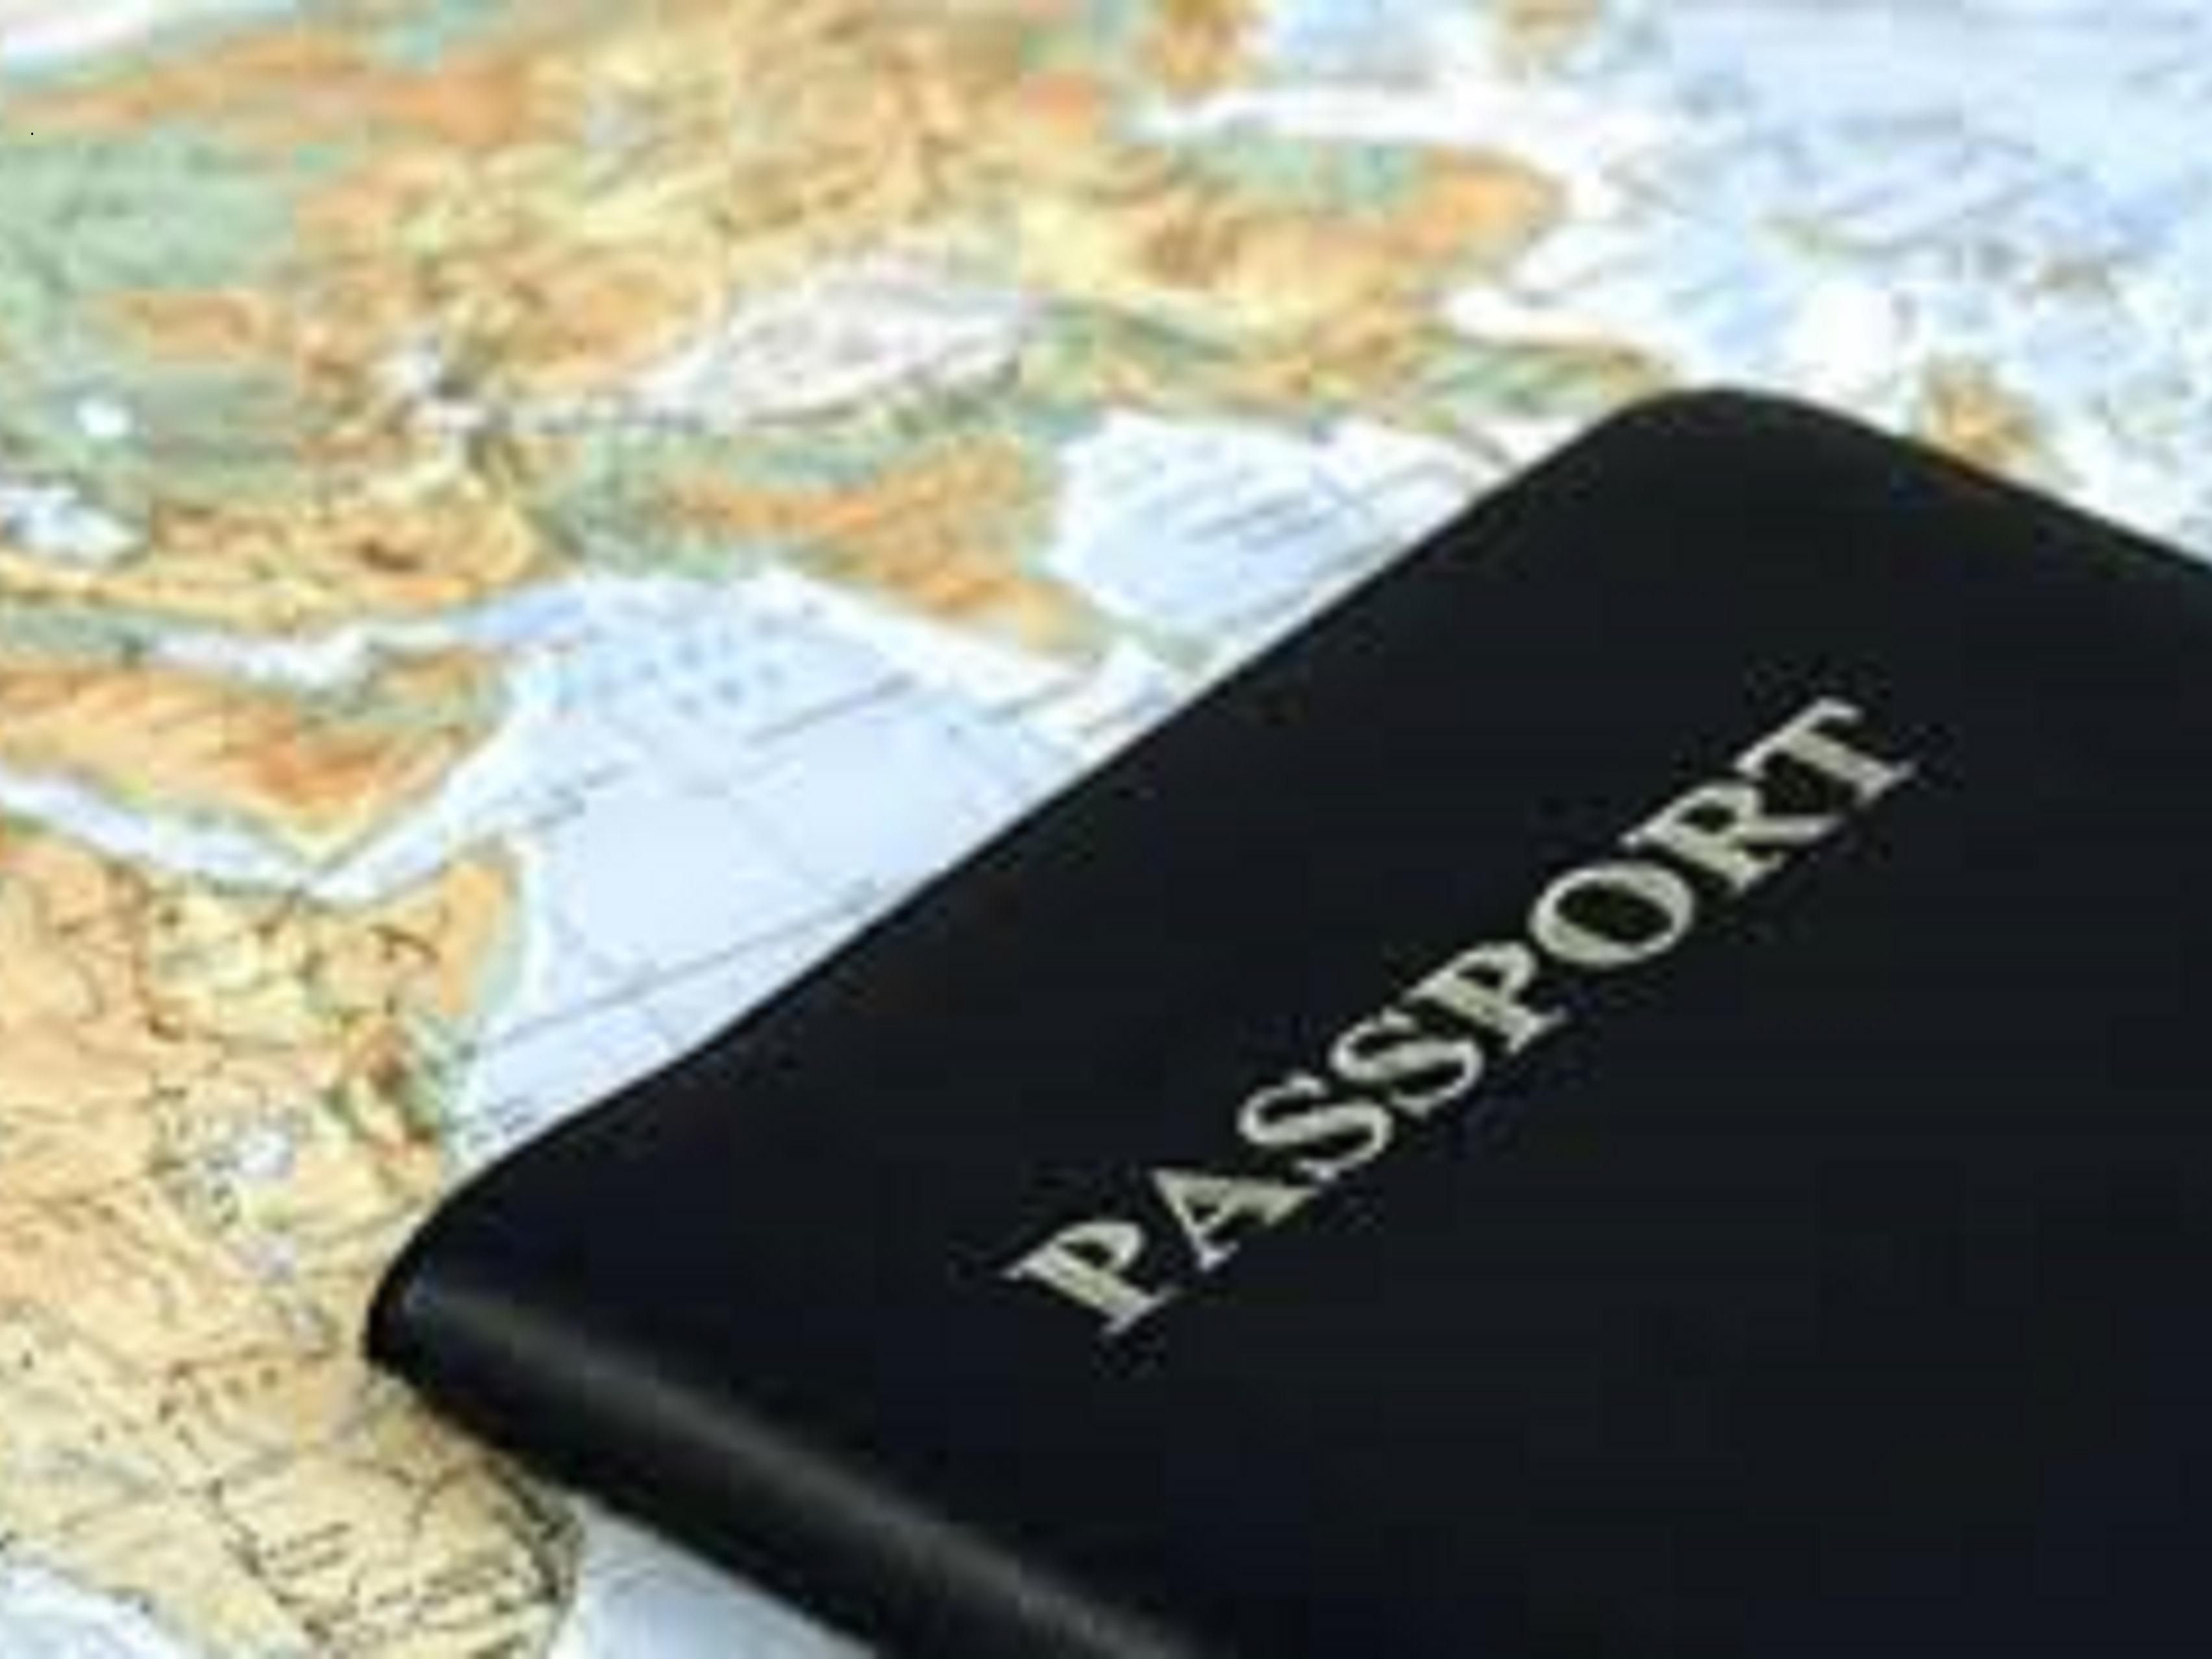 Planning to Get Your Passport?